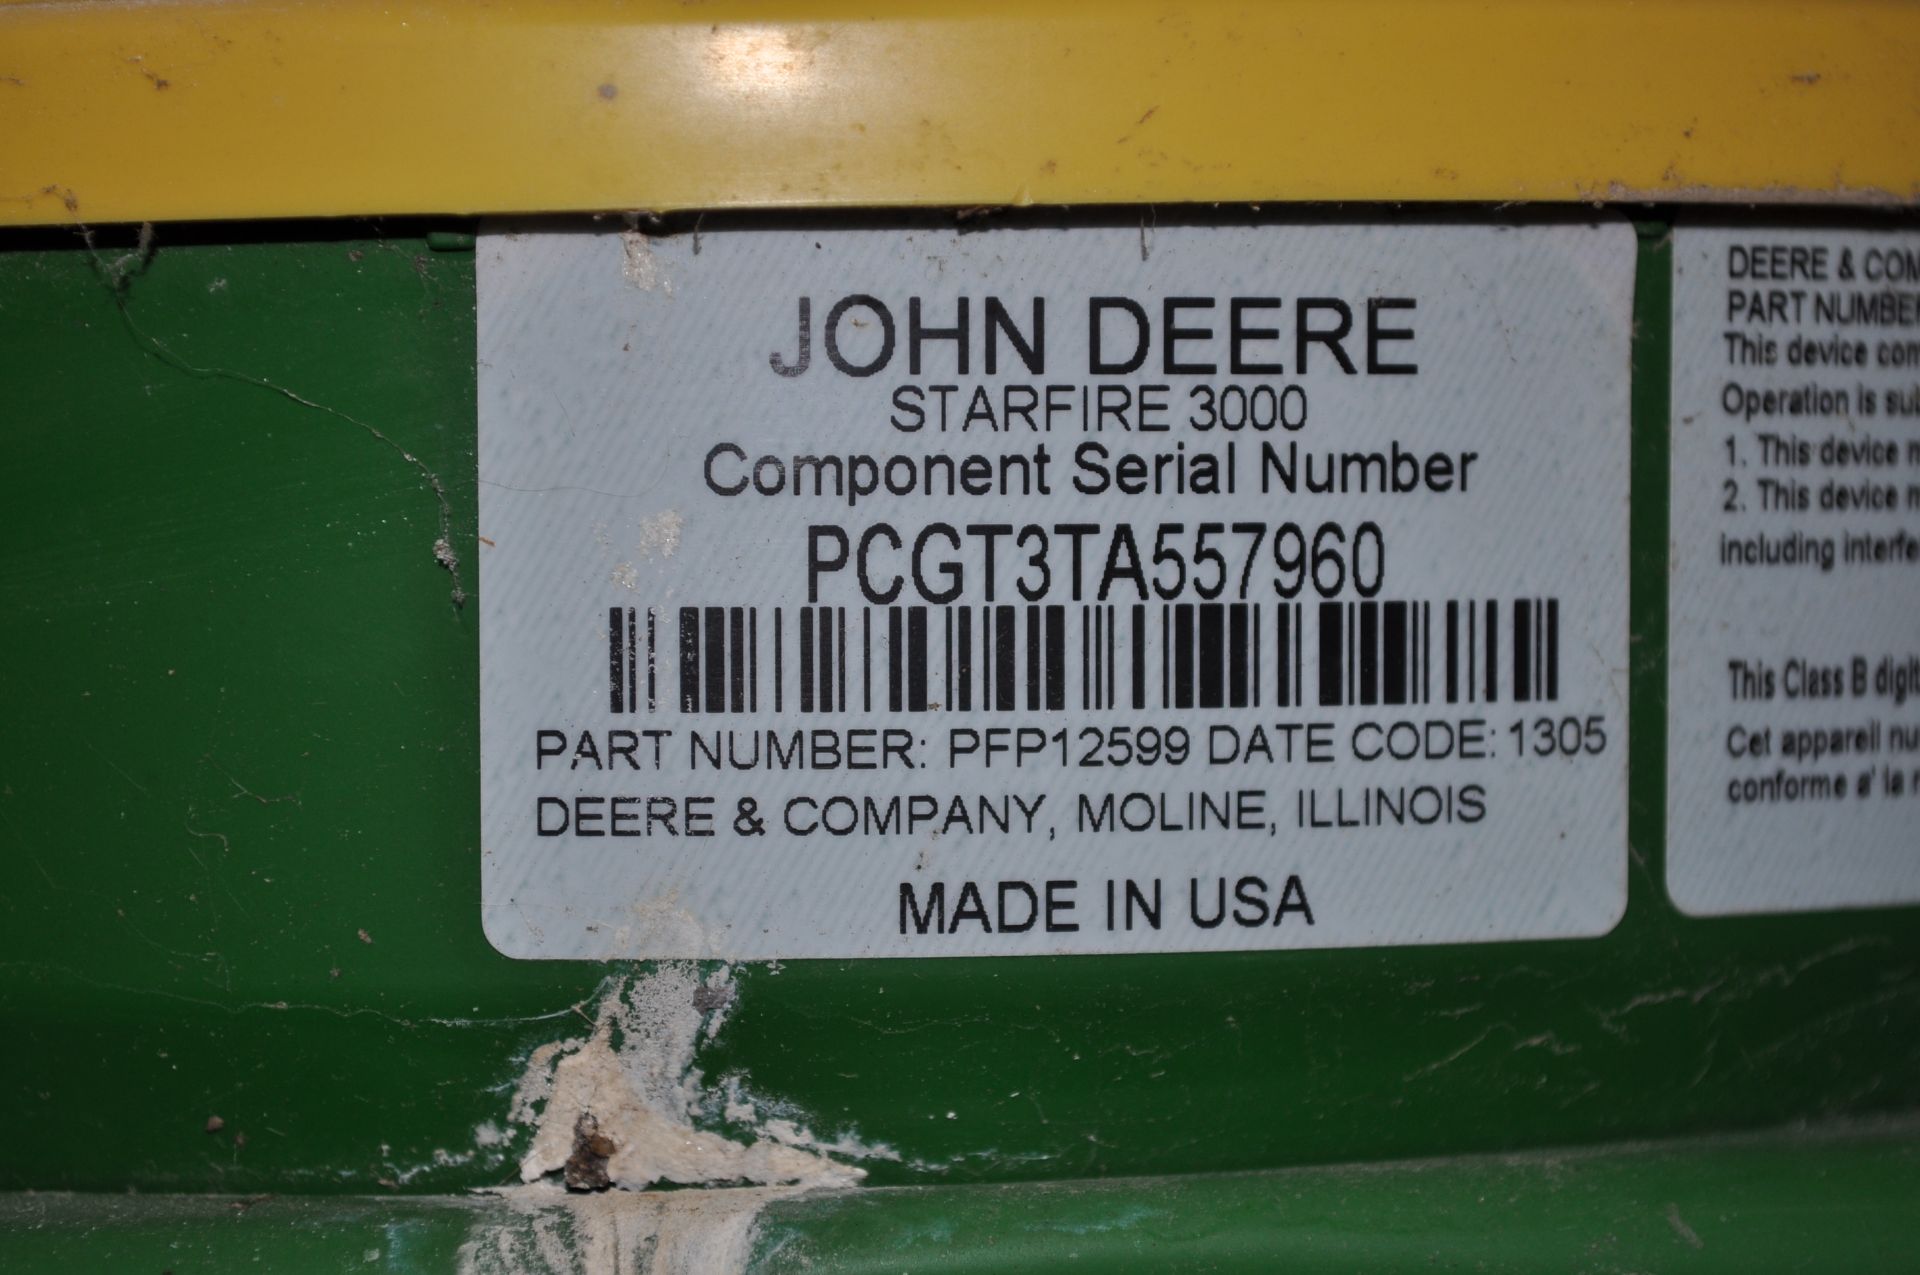 John Deere StarFire 3000 receiver, SF1, SN PCGT3TA557960 - Image 3 of 3